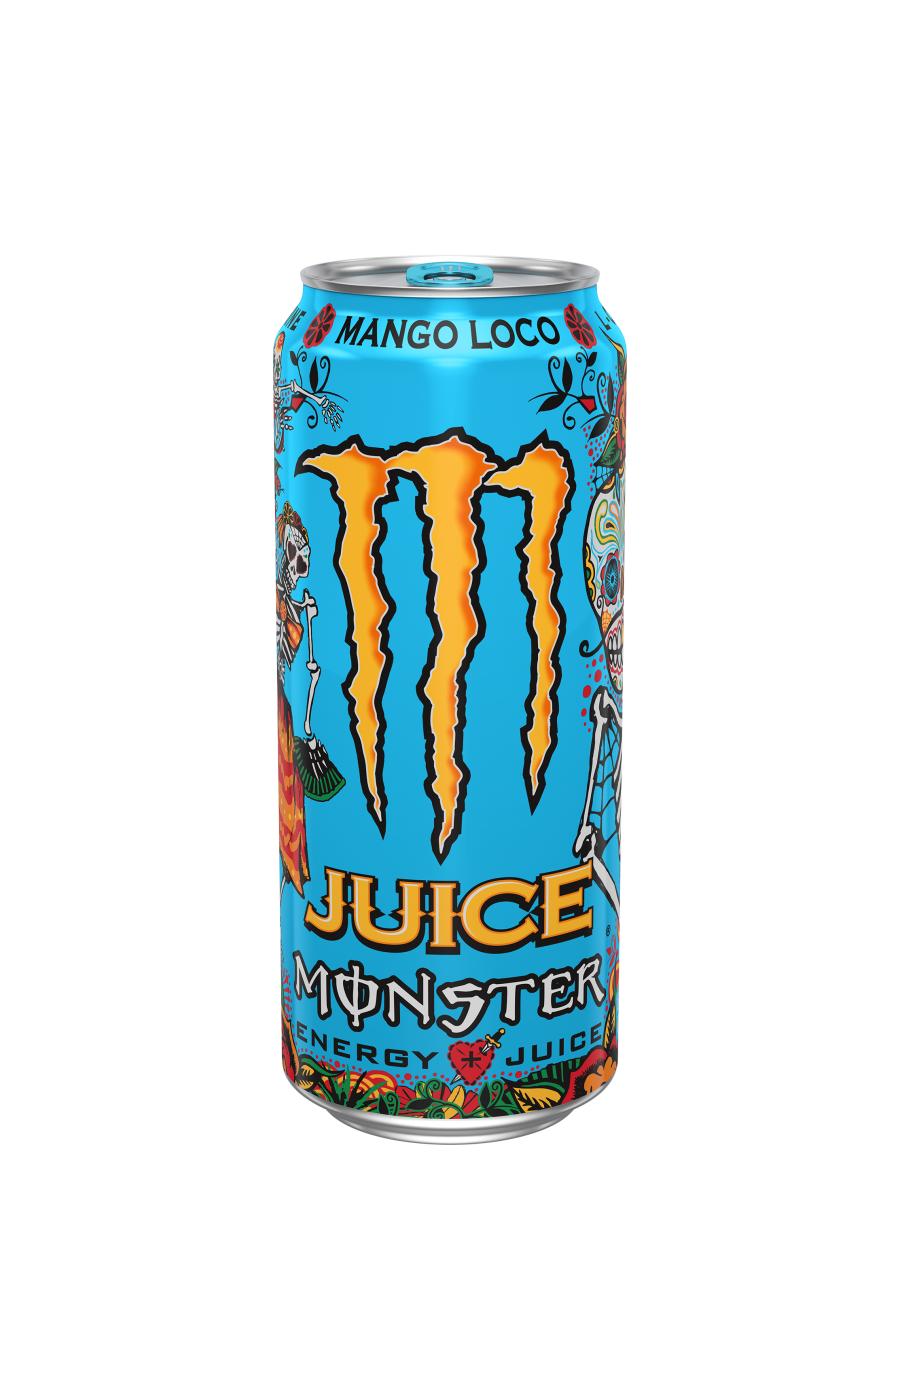 monster energy drink flavors